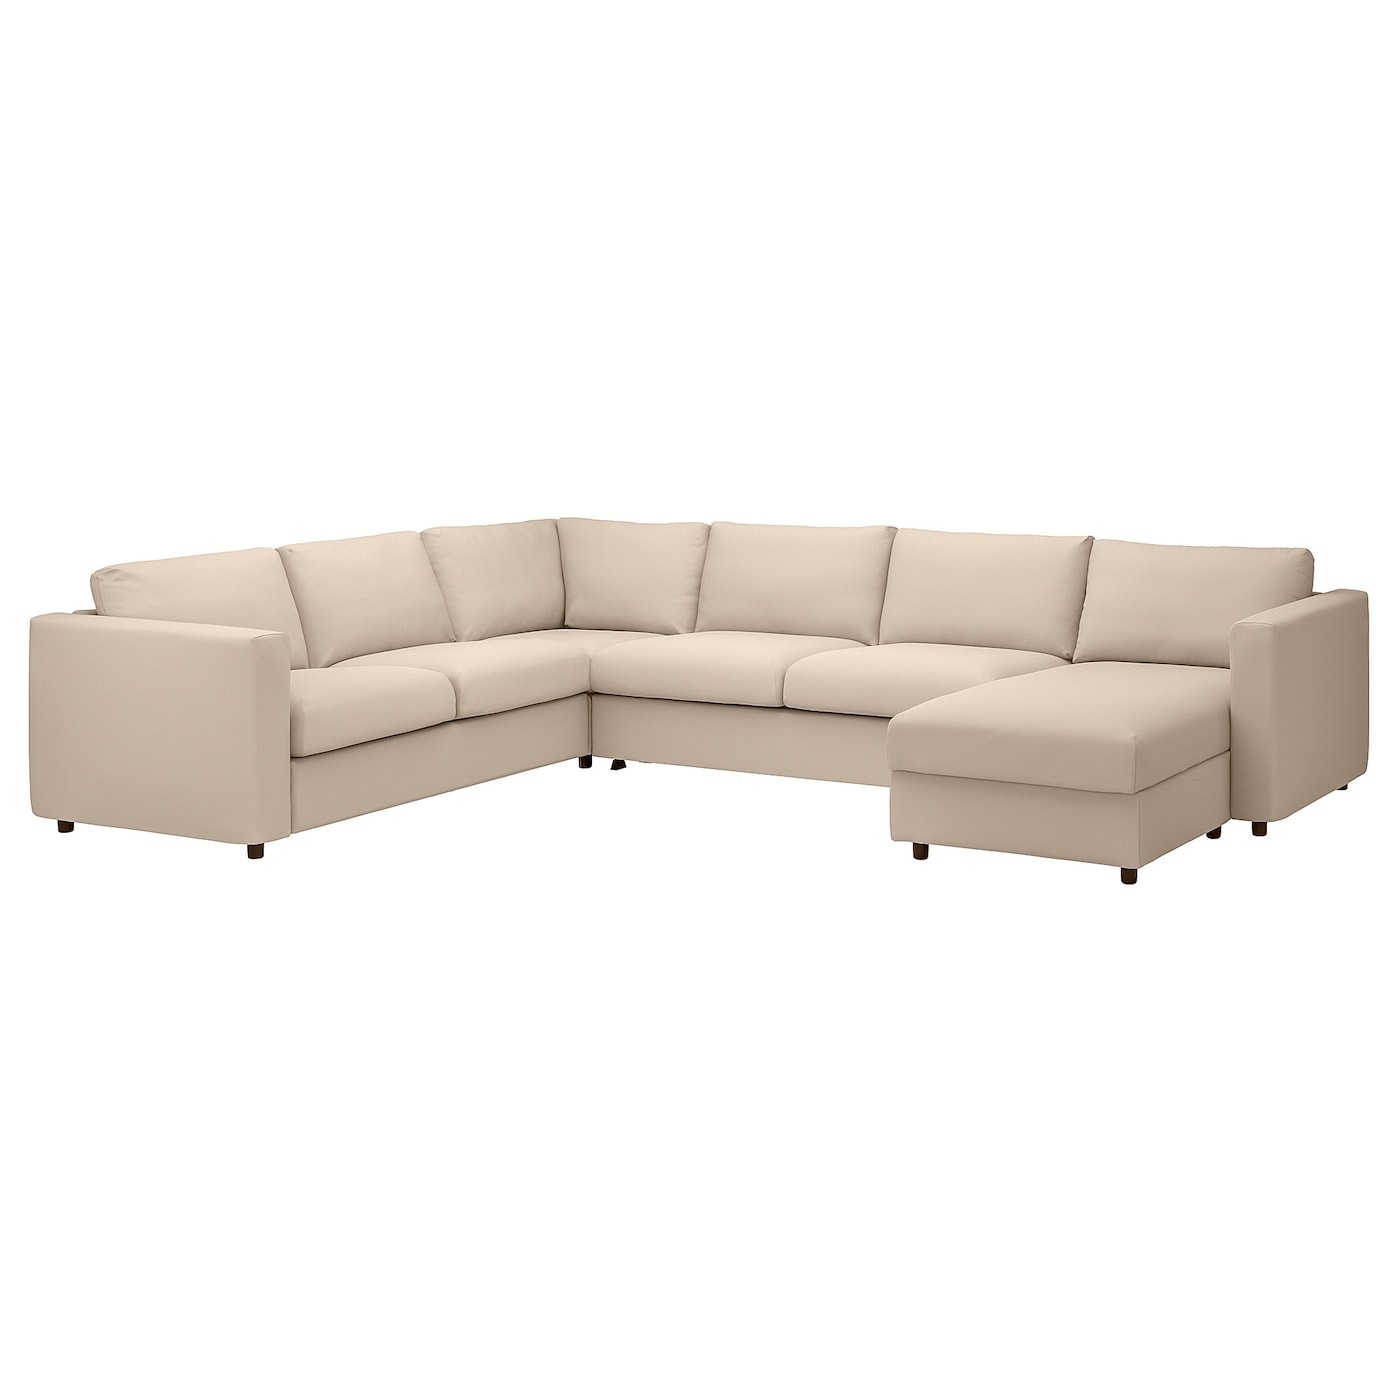 VIMLE Cover for corner sofa, 5-seat